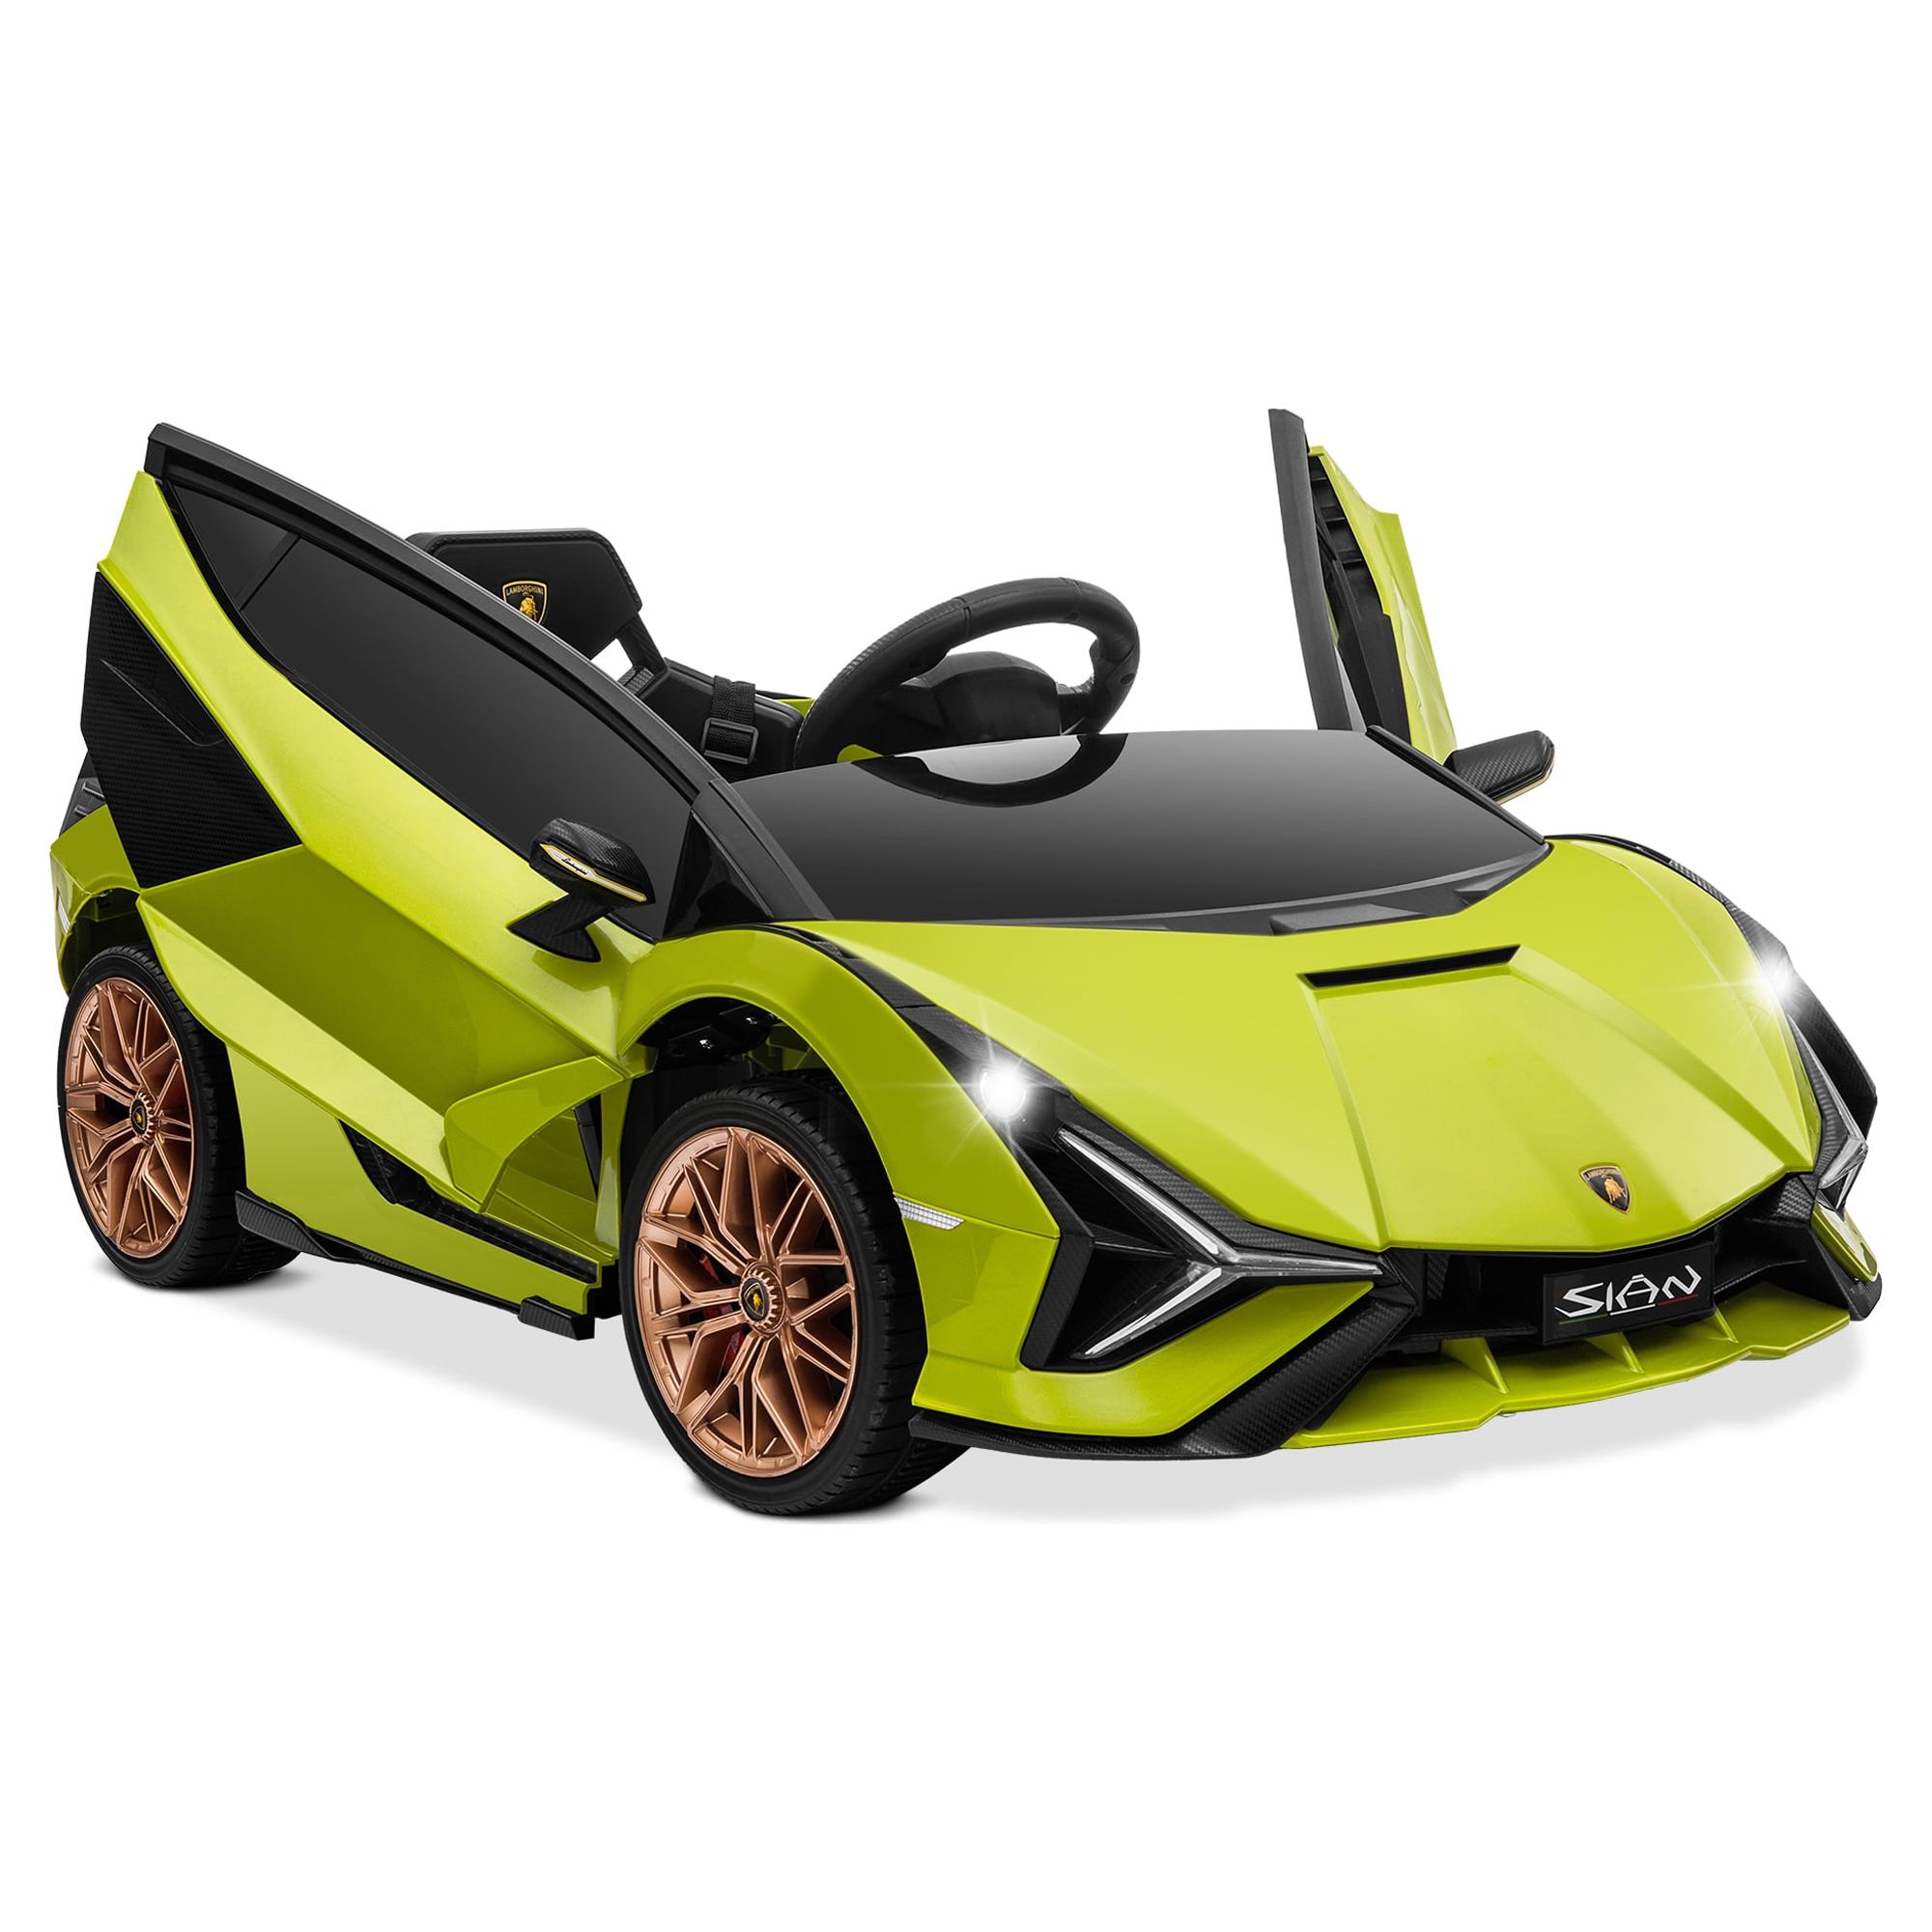 Kidzone Kids 12V Electric Licensed Lamborghini Car – Green with Gold Rim - image 1 of 6